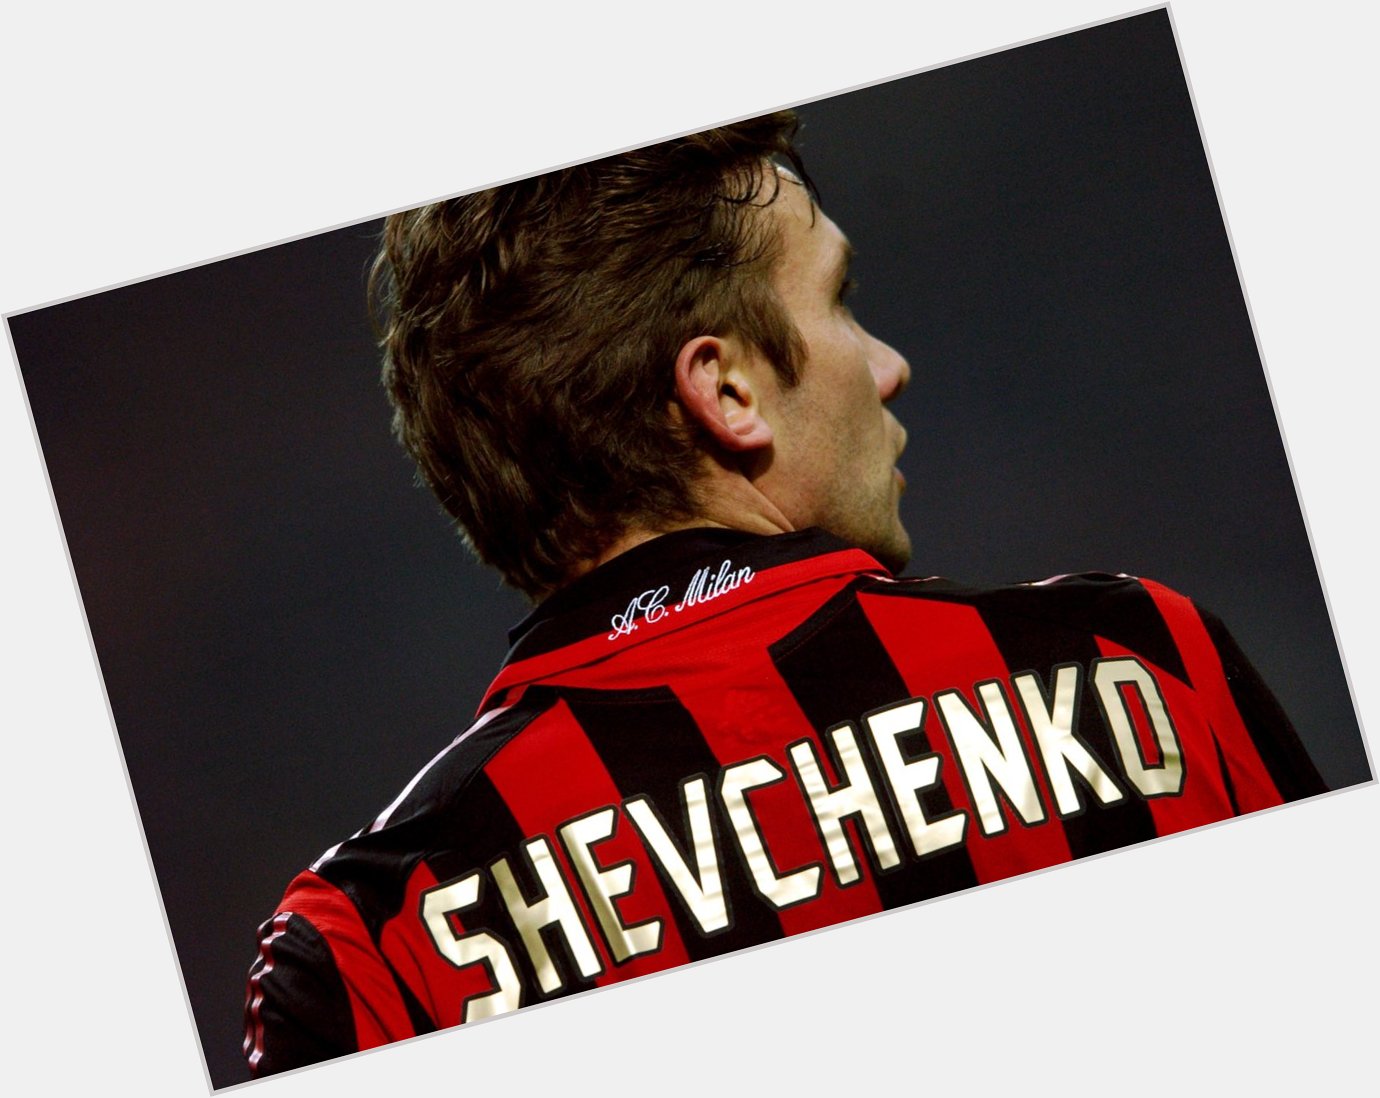   Most goals for Ukraine  Most goals in the Milan Derby Ballon d\Or winner

Happy birthday, Andriy Shevchenko. 